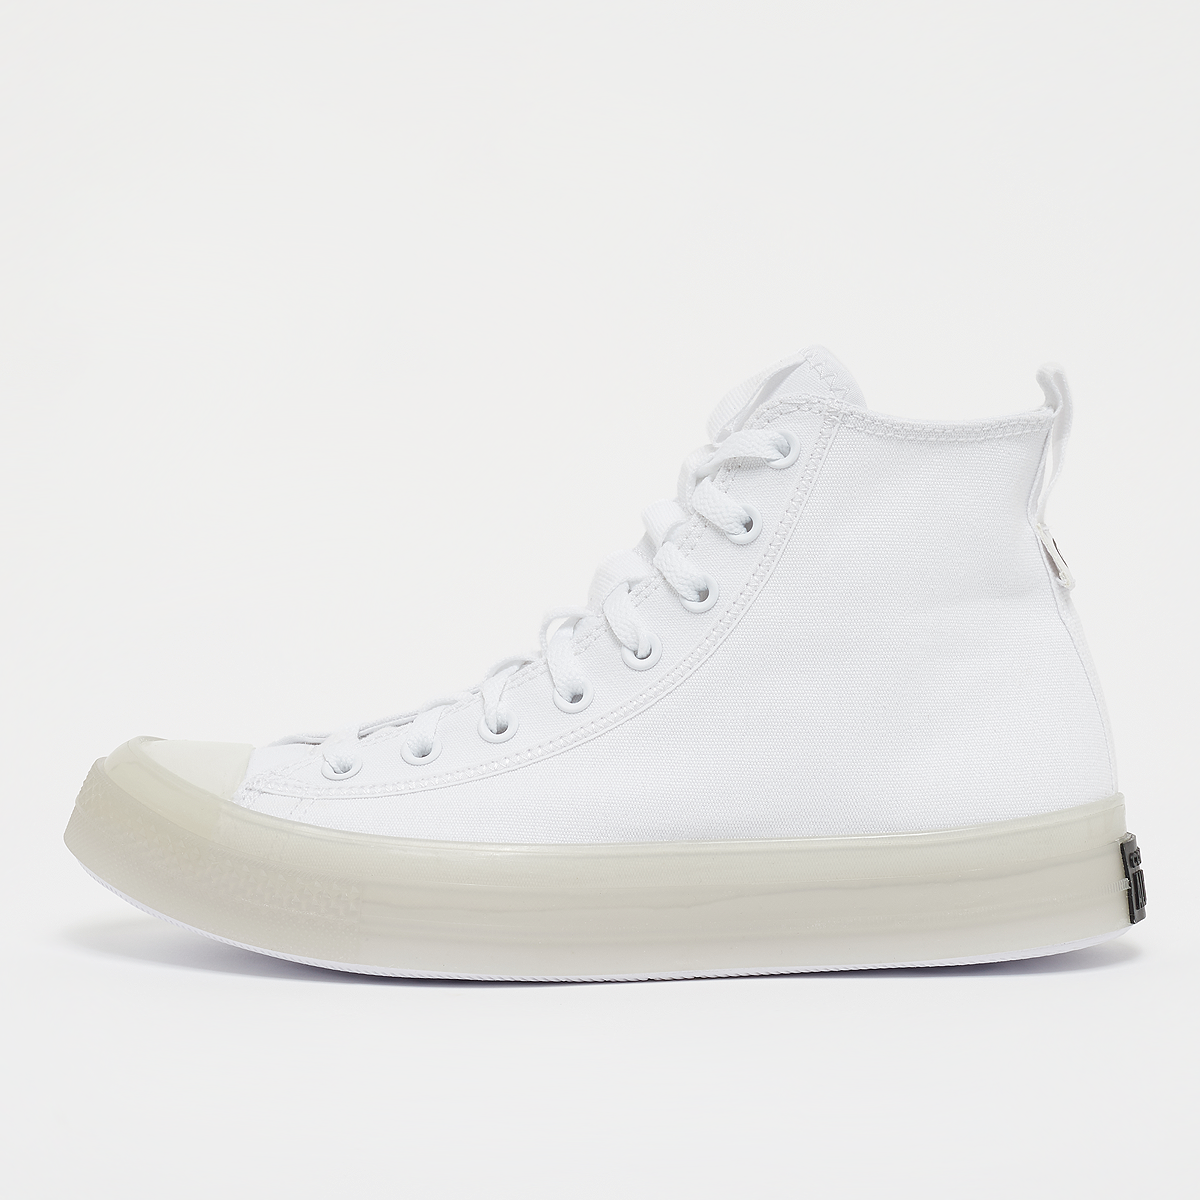 Chuck Taylor All Star CX Explore, Converse, Footwear, white/white/black, taille: 44.5